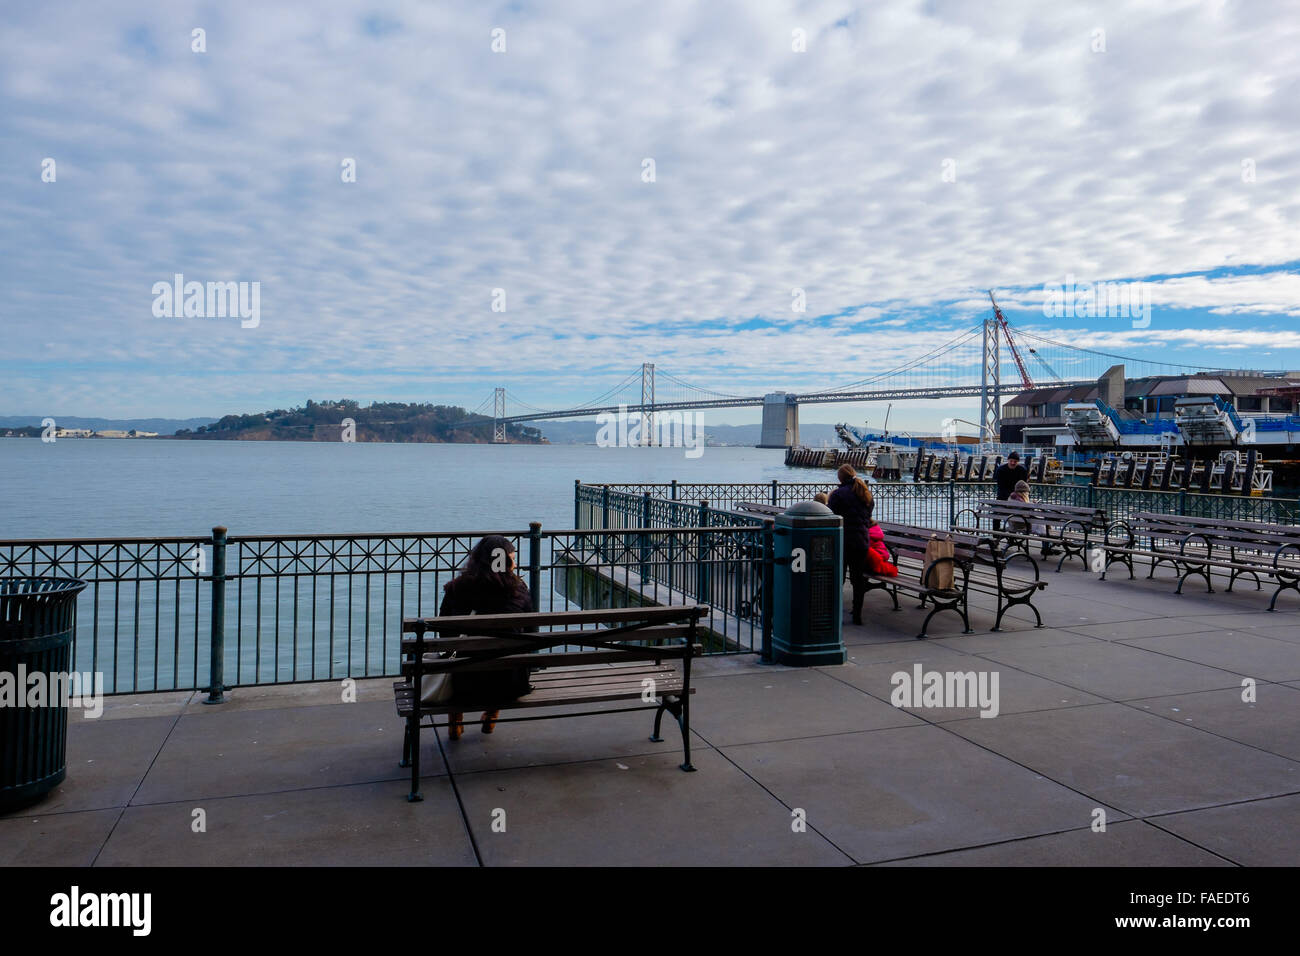 SAN FRANCISCO, CA - DECEMBER 12, 2015: Bay Bridge as seen from the Embarcadero in San Francisco. Stock Photo